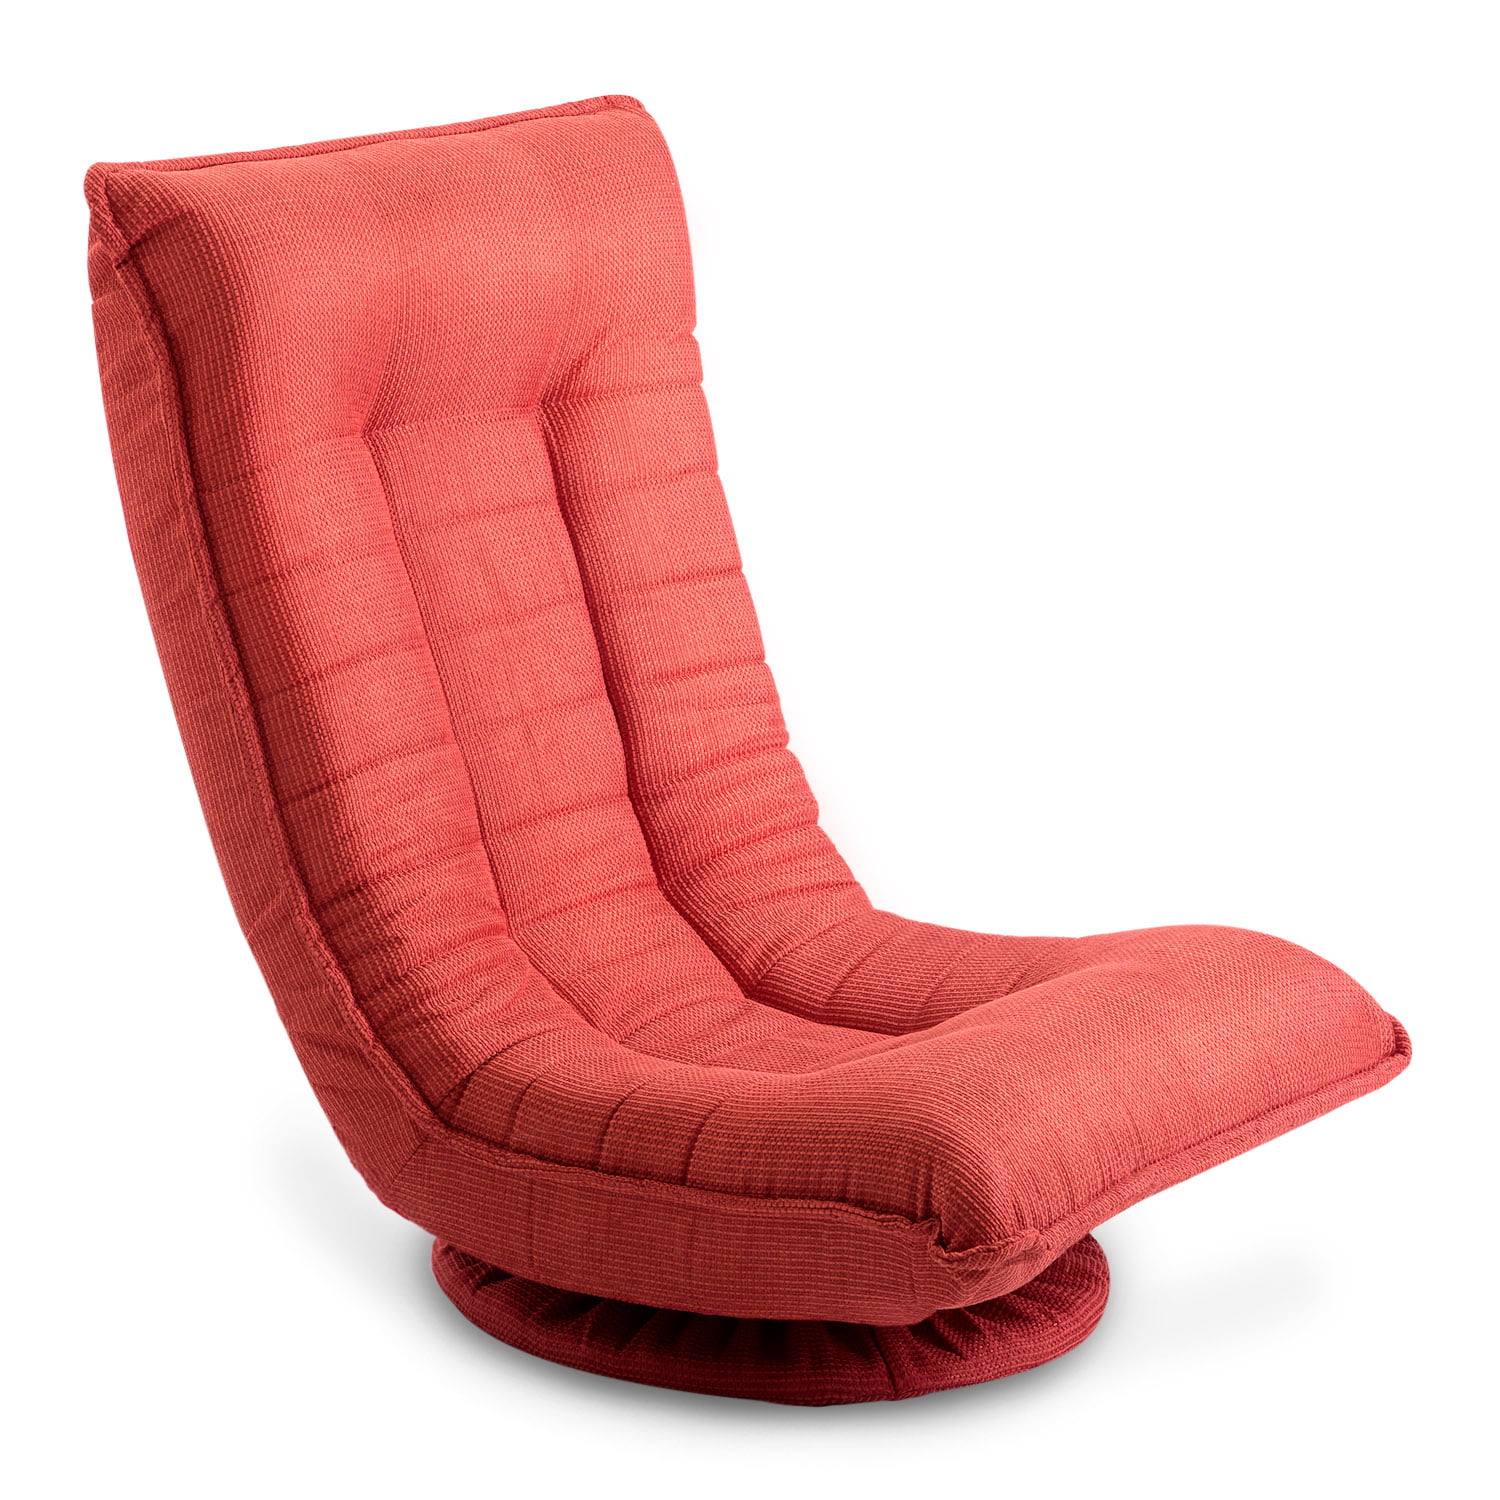 360 degree rotatable folding video game chair floor lazy sofa chair